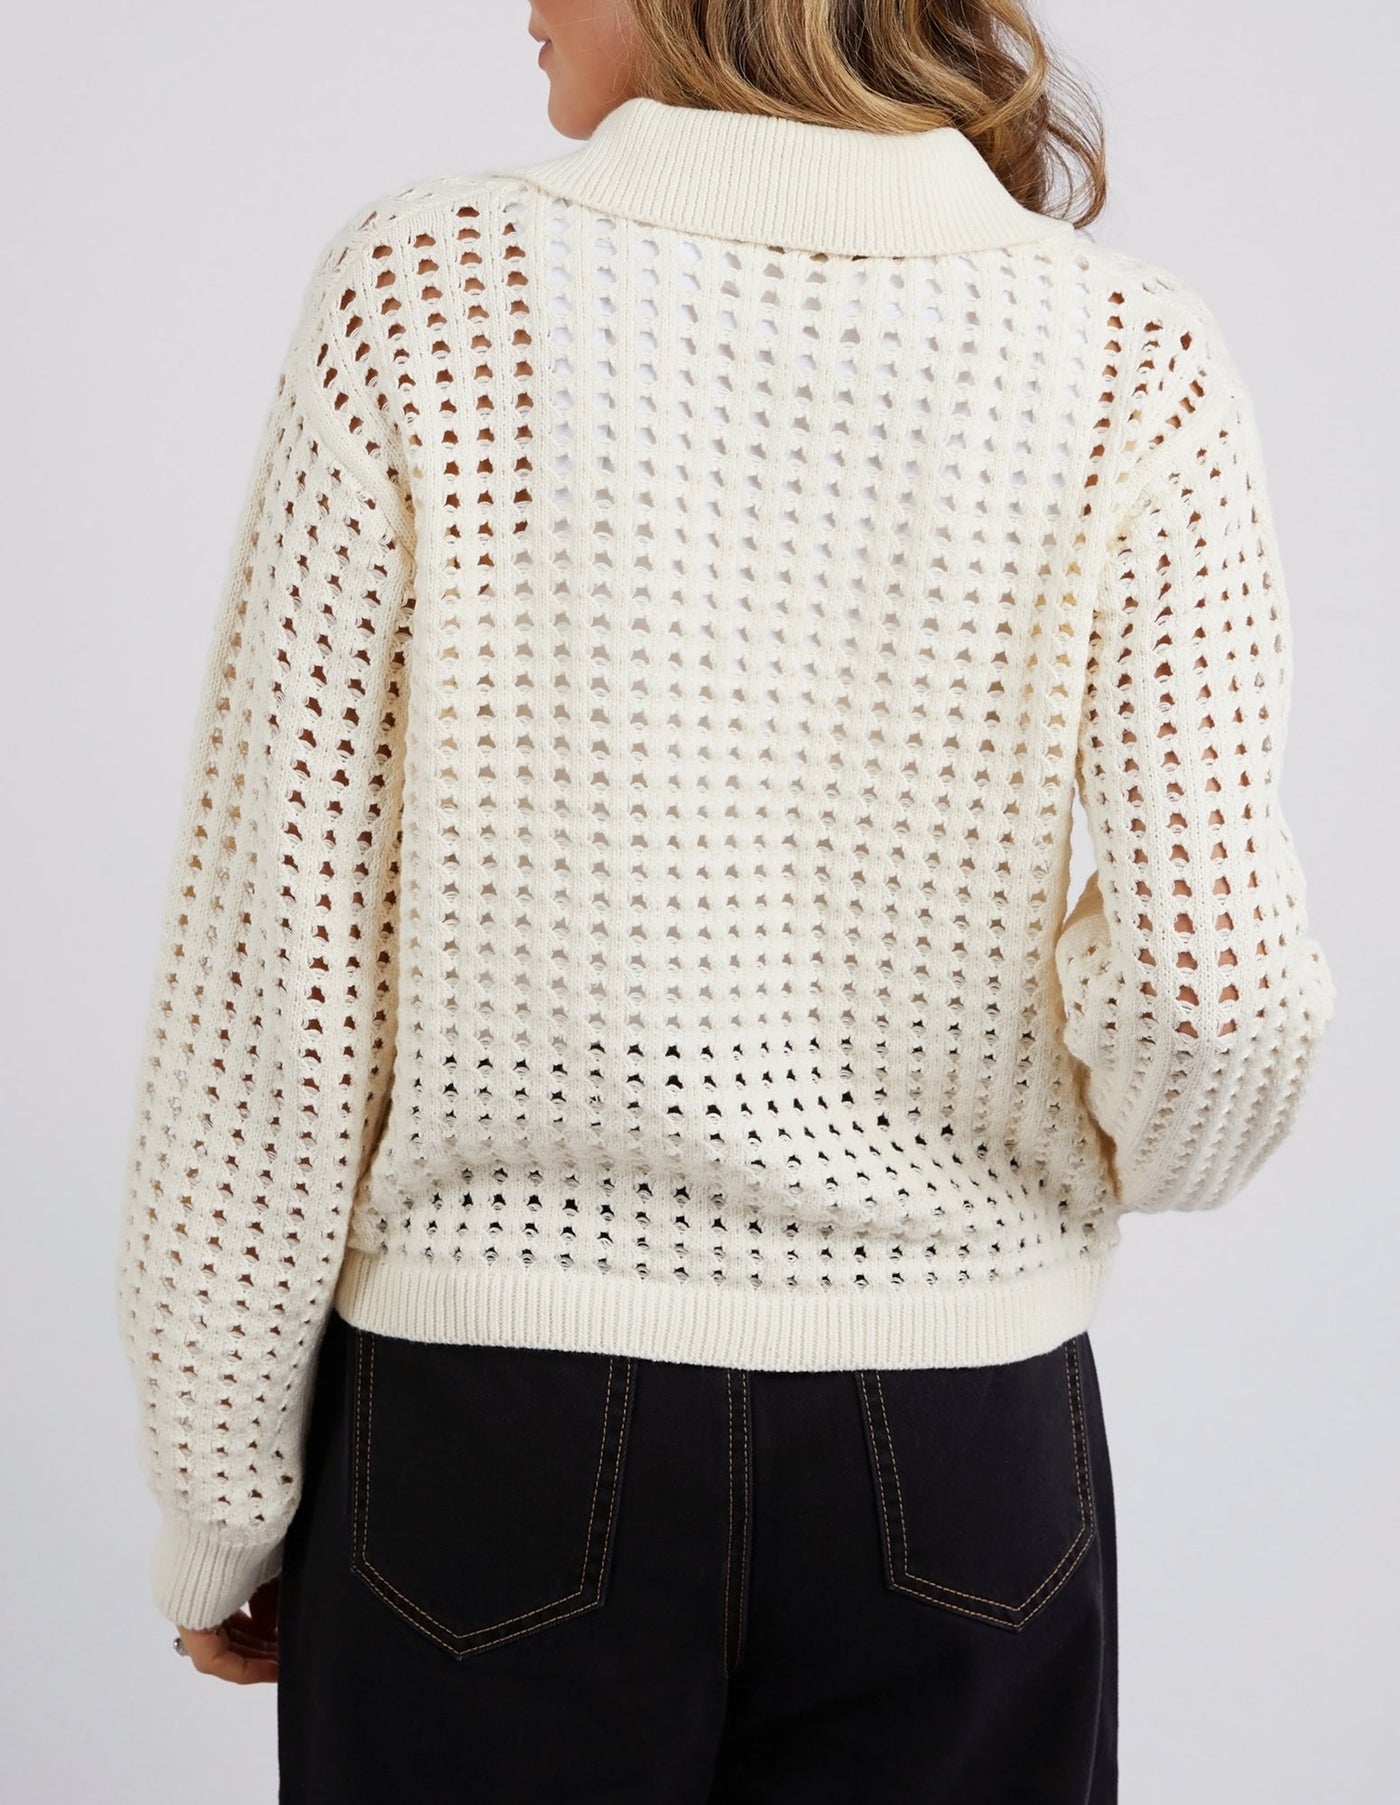 Clover Knit Cardigan - Vintage White